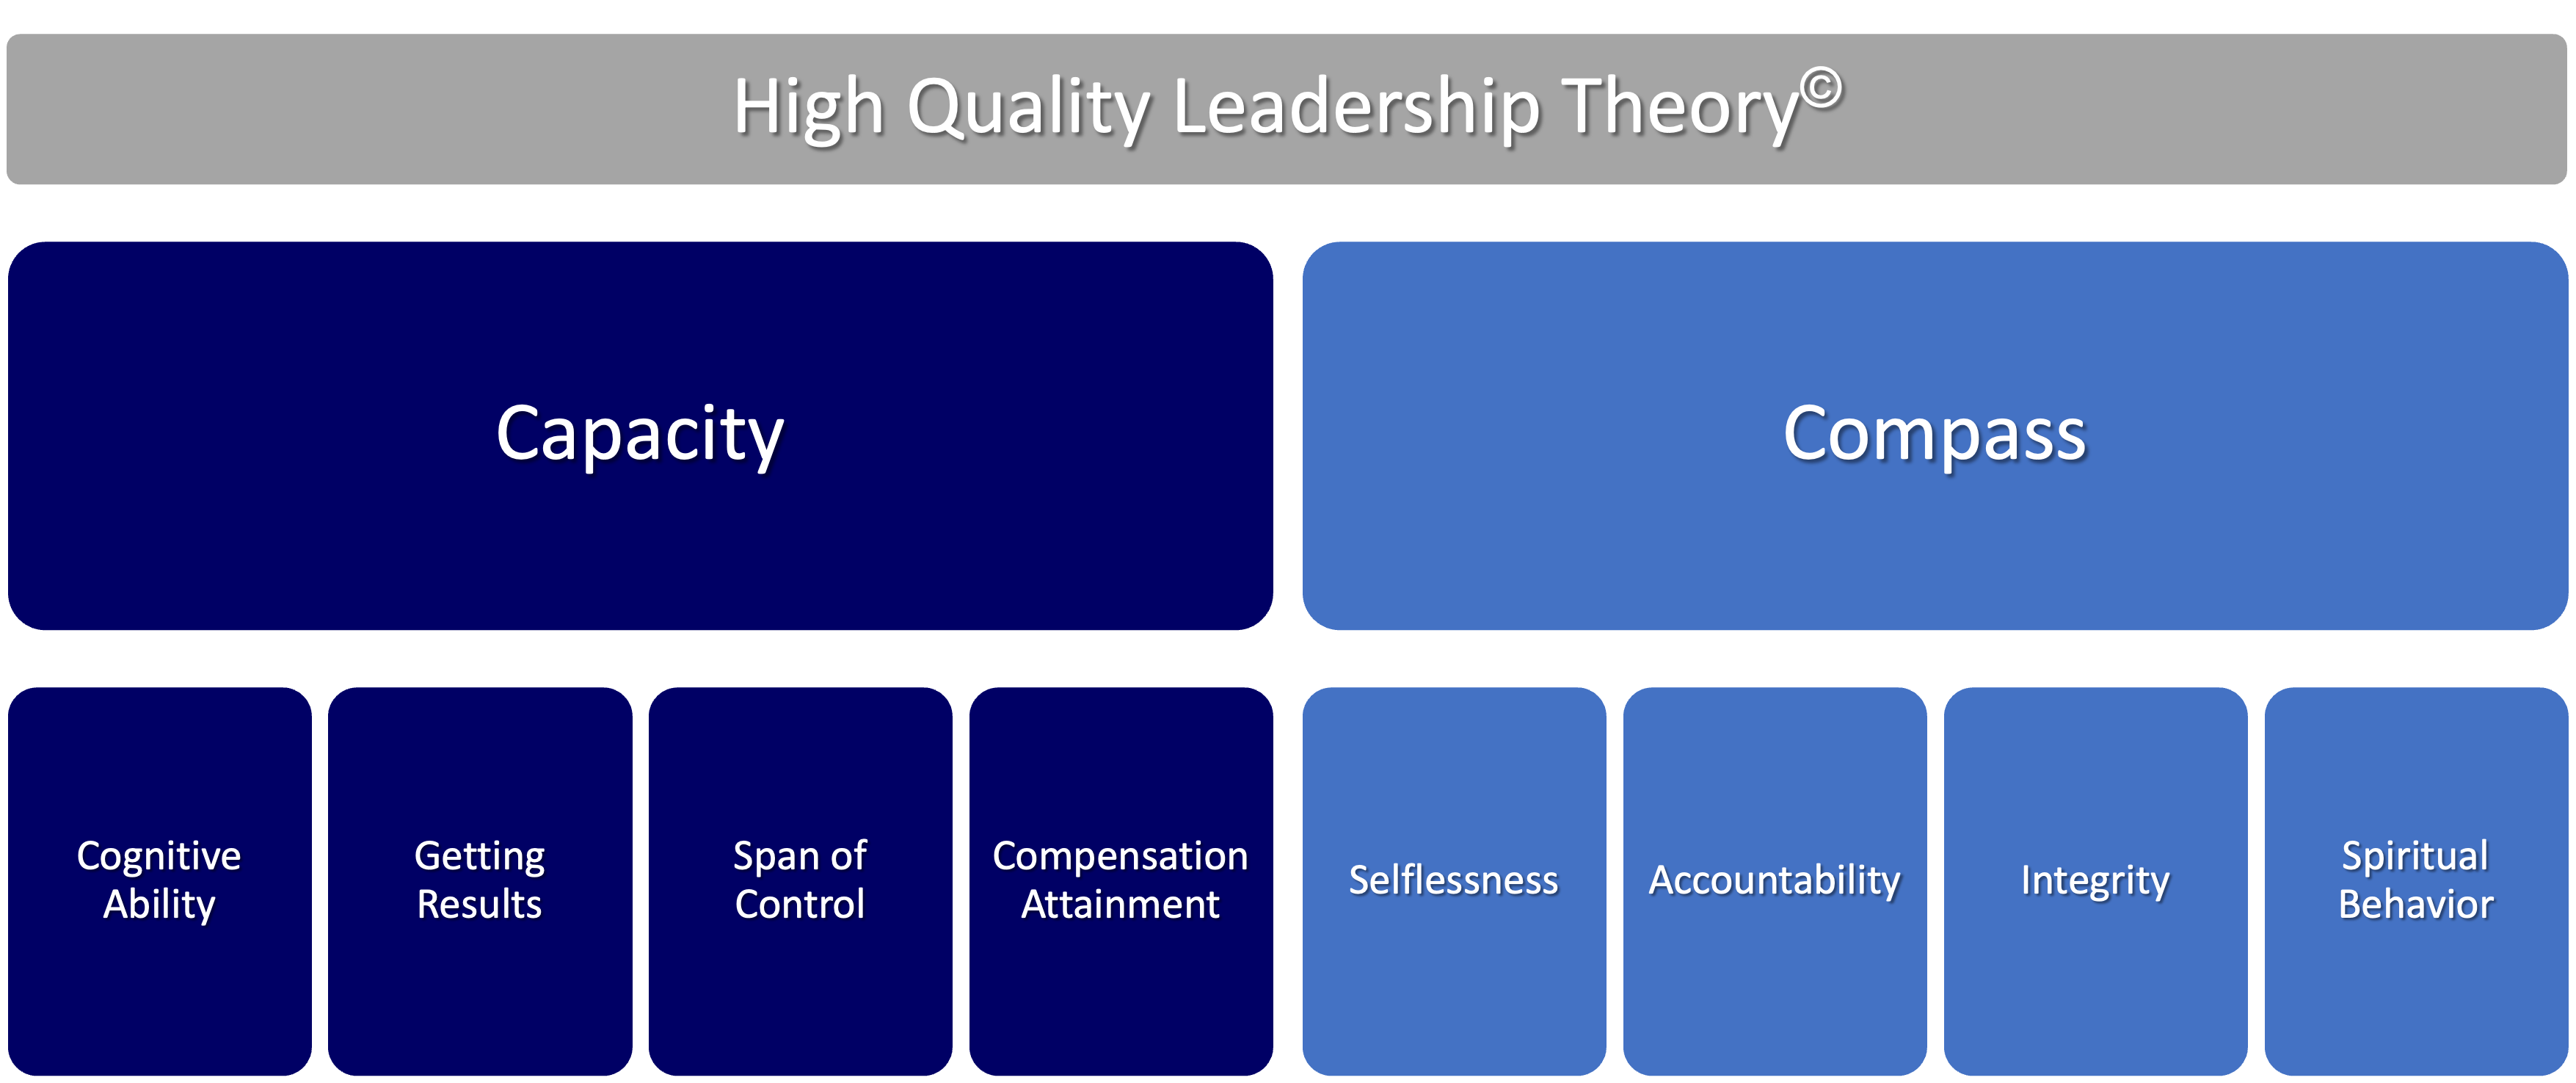 Leadership Theory